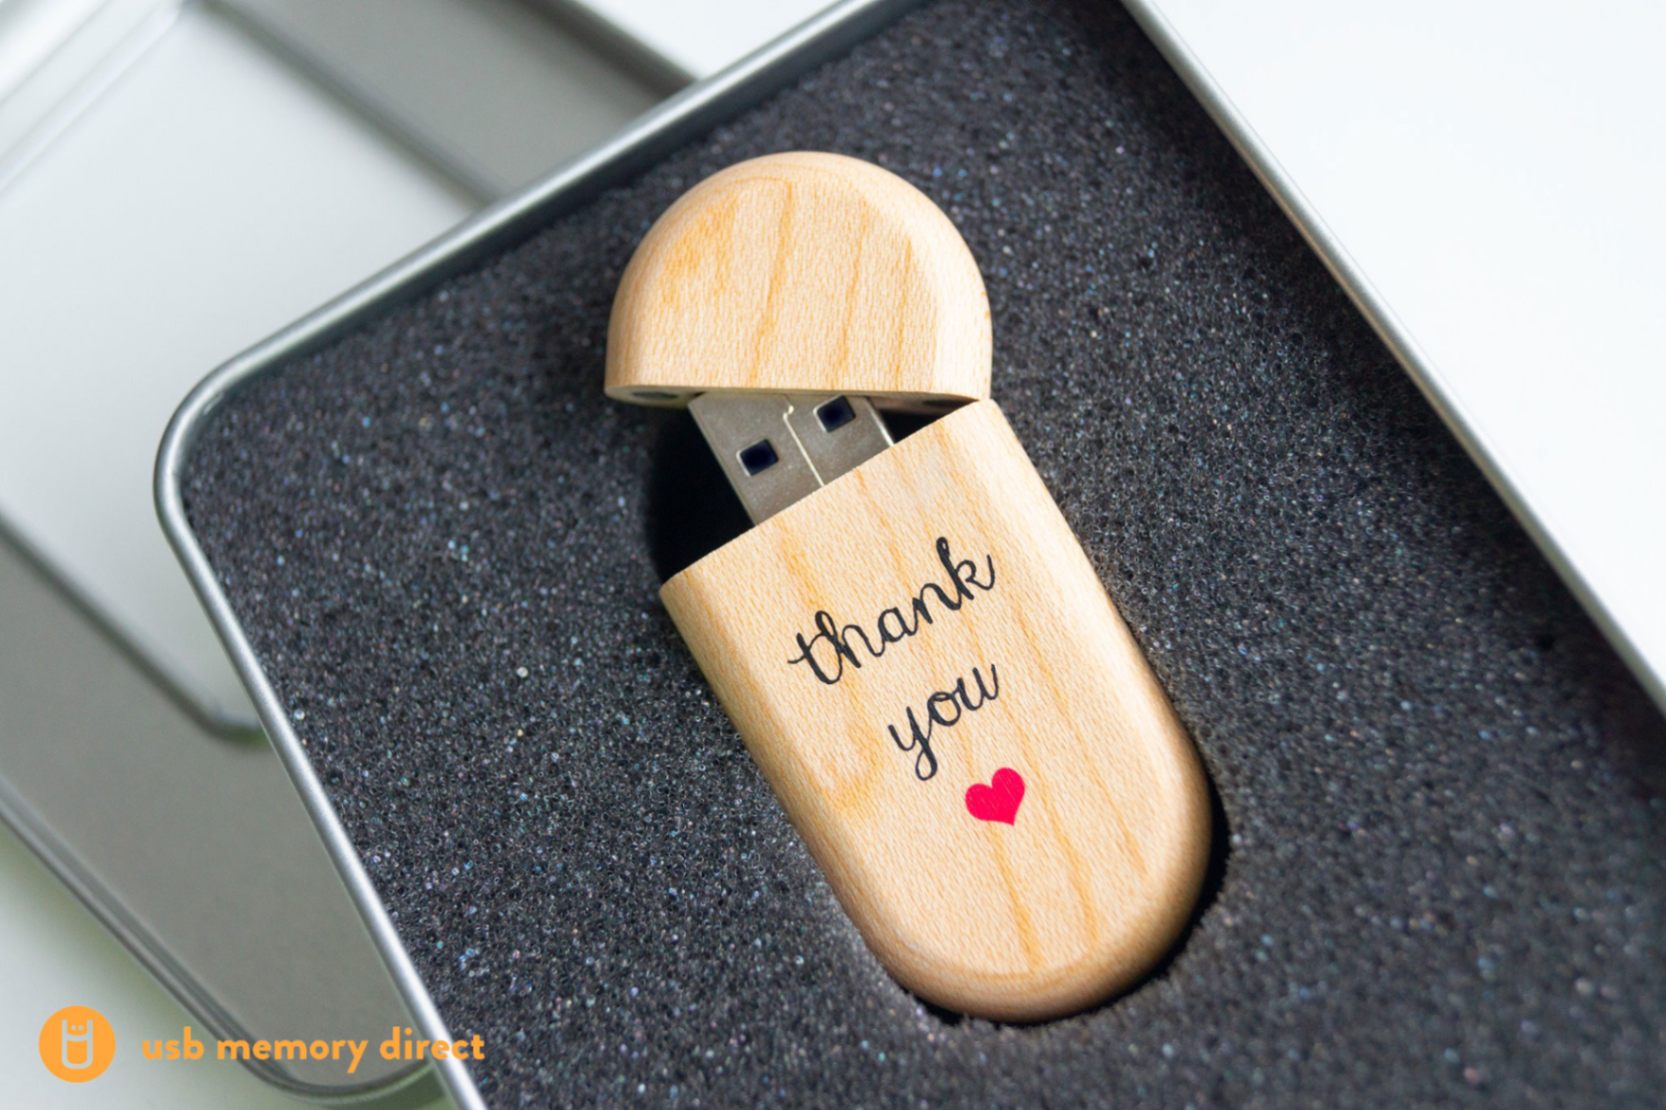 Custom Wooden USB thumb drive - USB Memory Direct 